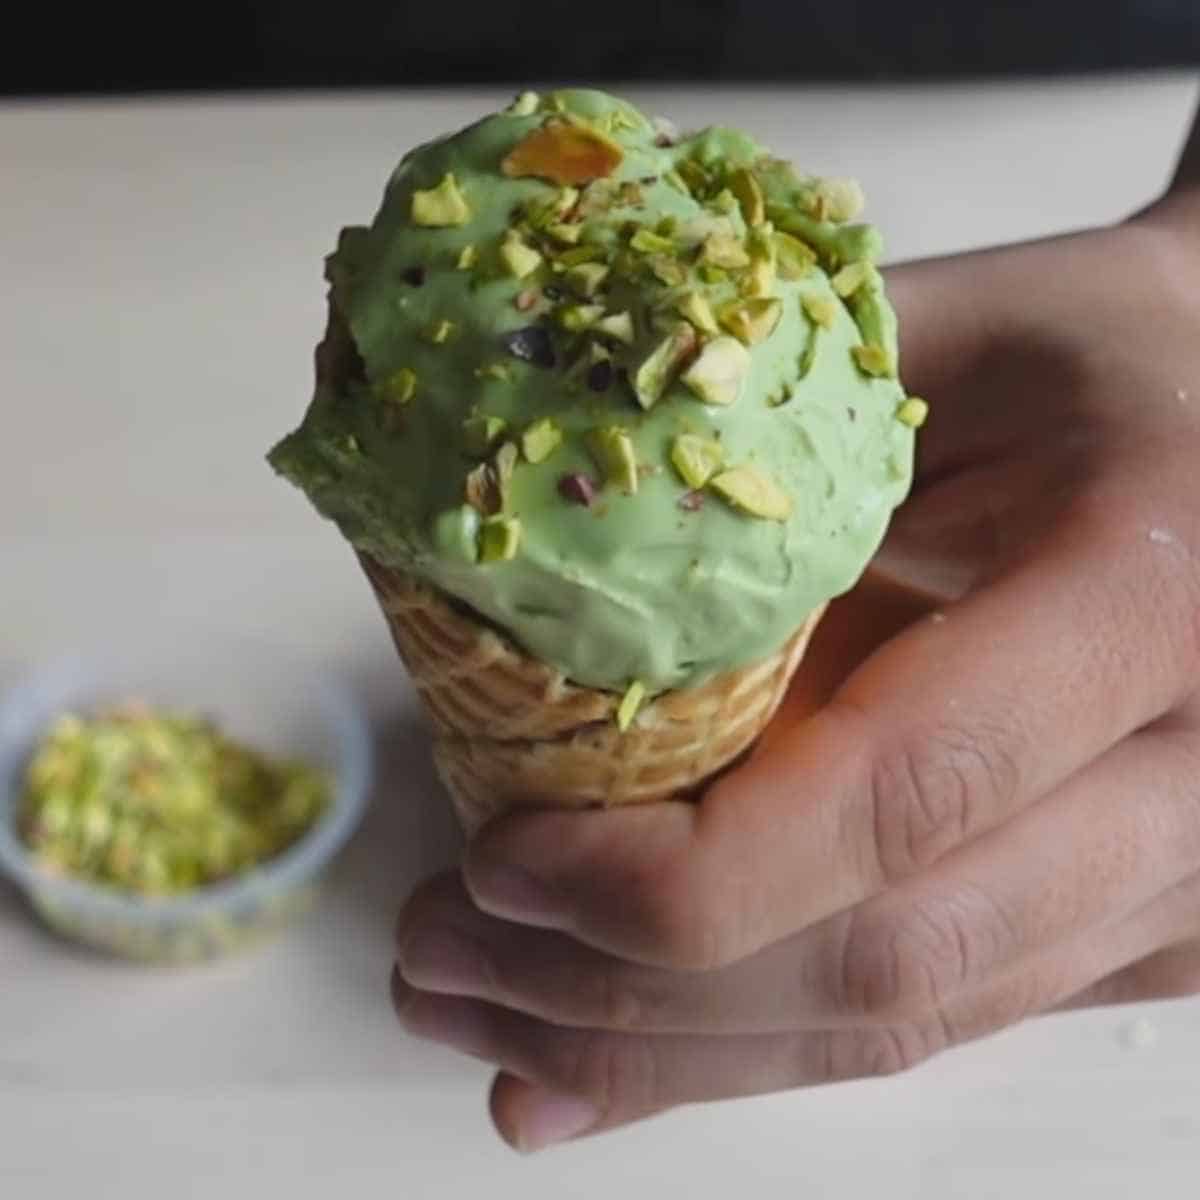 pistachio topping for green tea ice cream